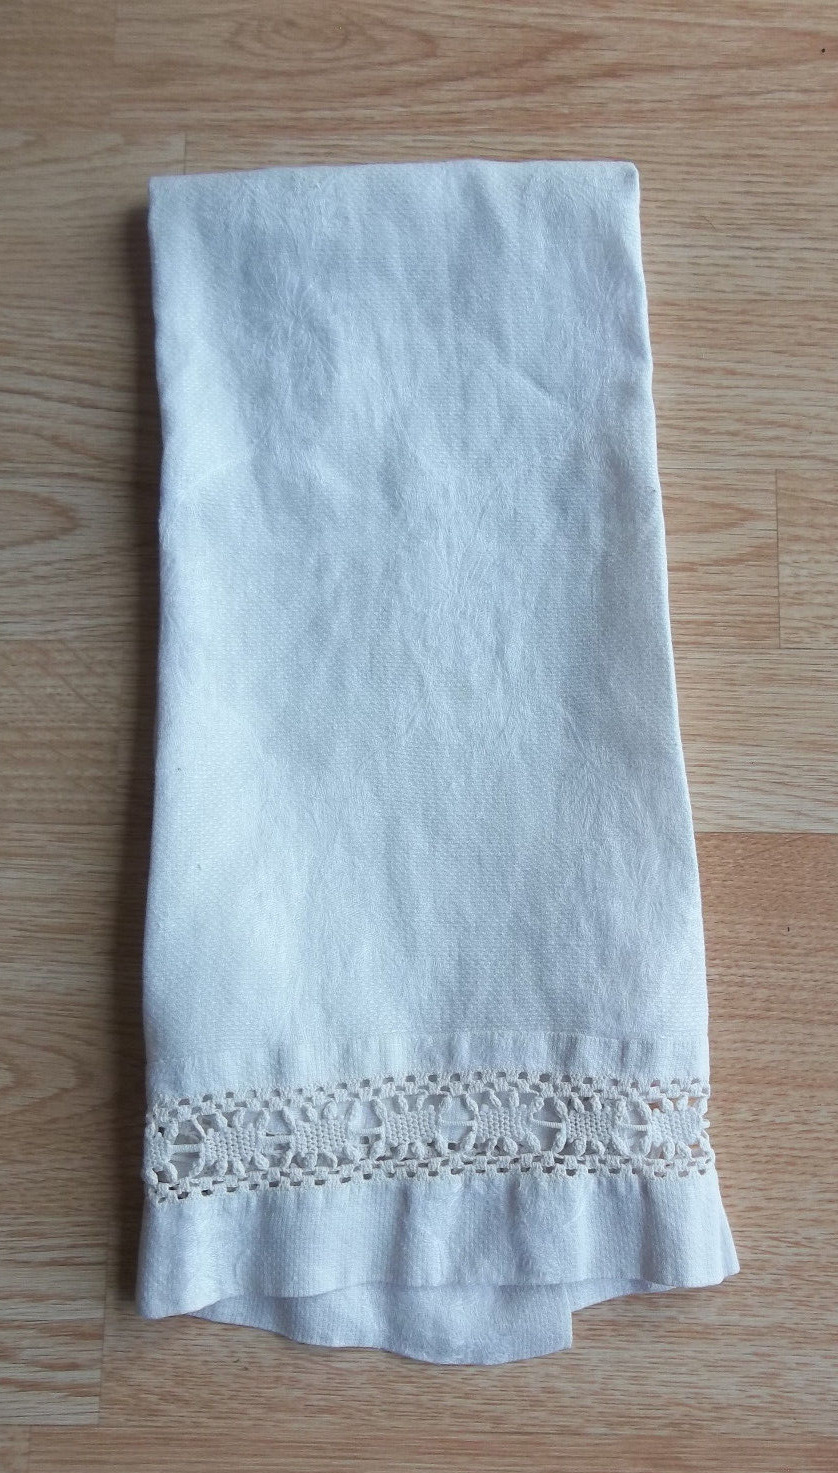 Vintage White Damask Towel